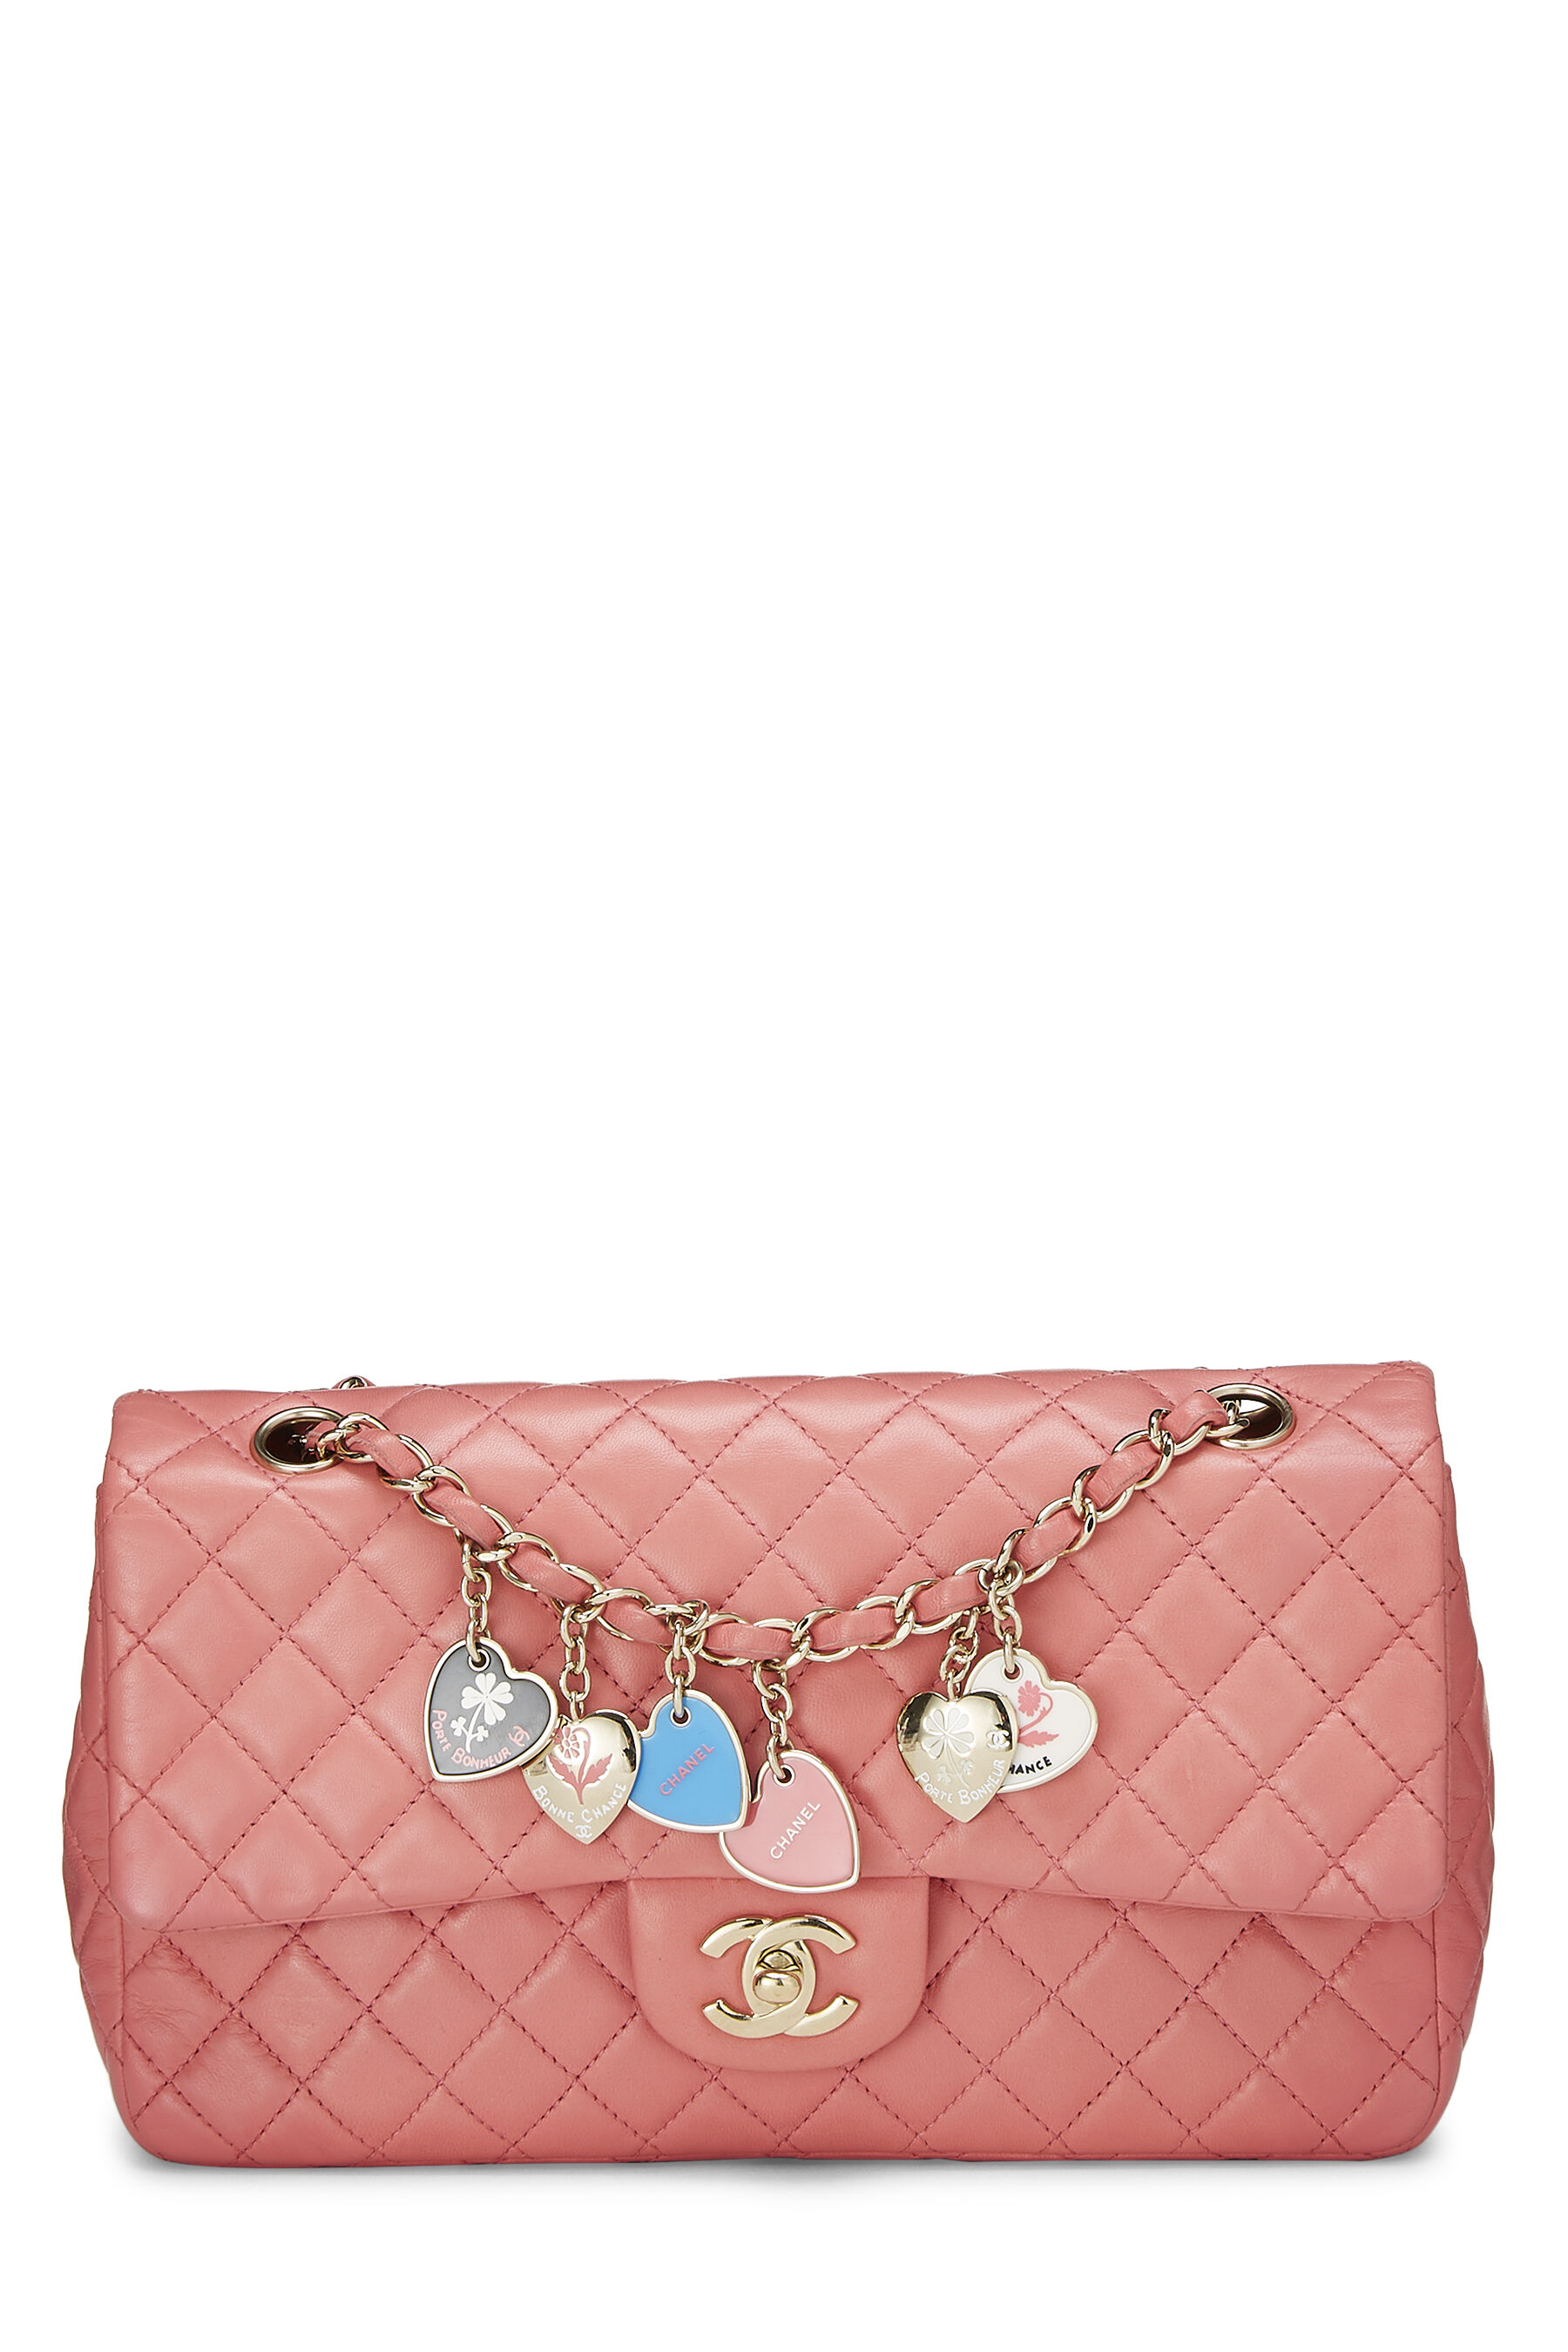 women's pink chanel bag